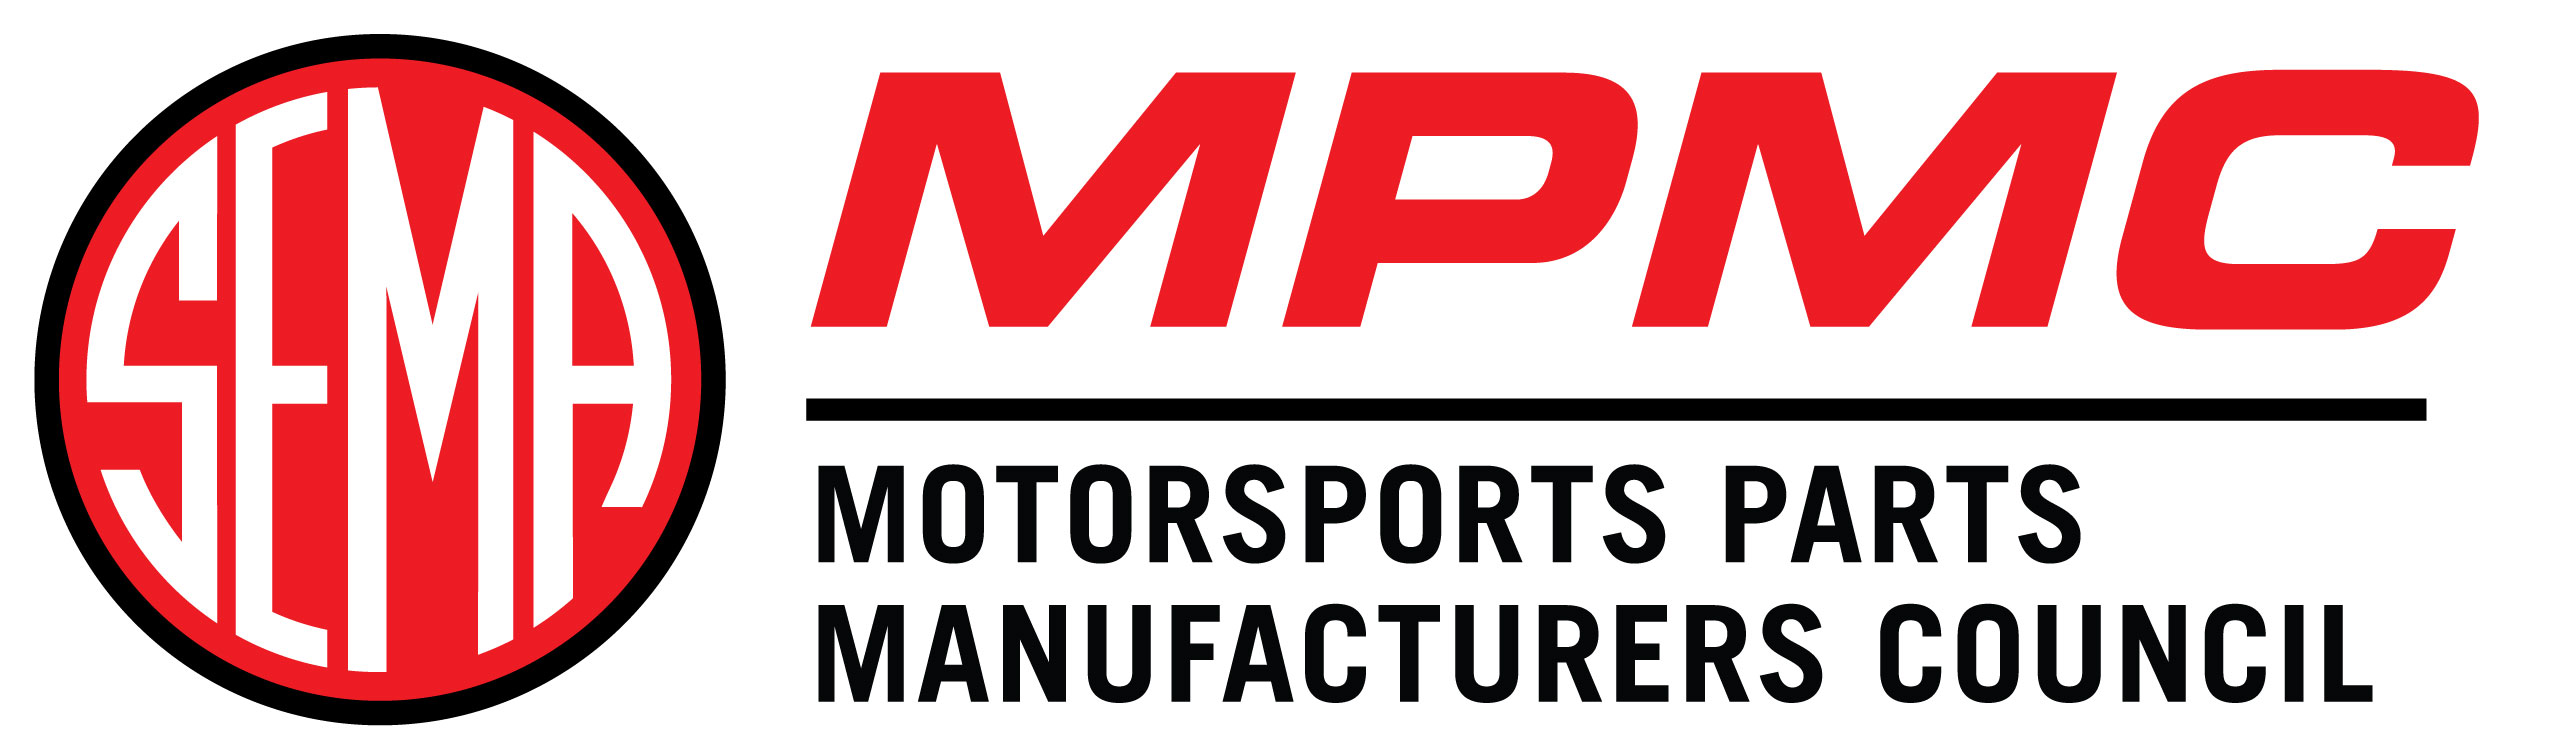 Motorsports Parts Manufacturers Council (MPMC) - logo